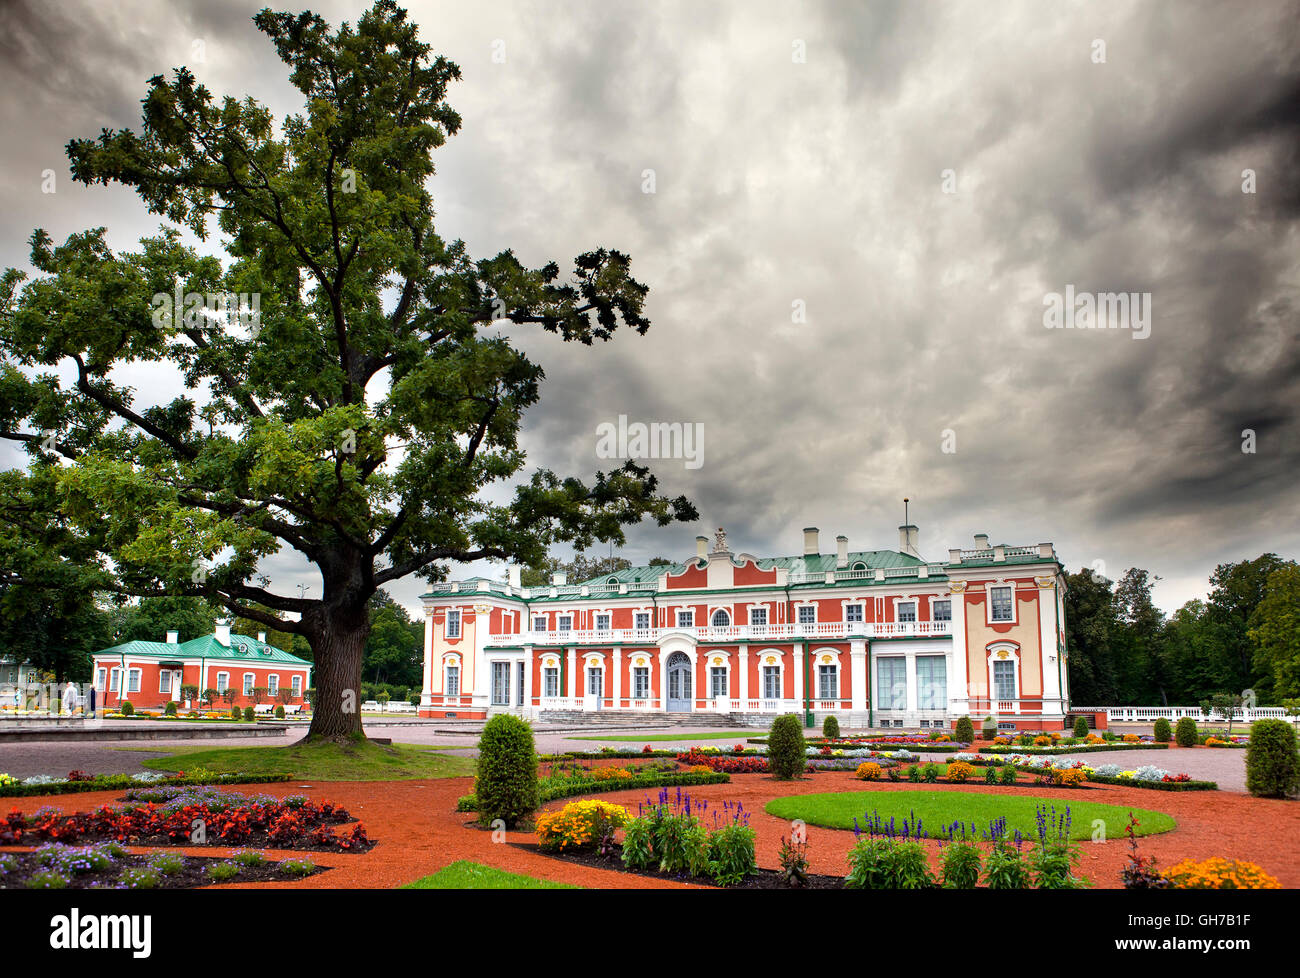 Kadriorg Palace, at Kadriorg Park inTallinn, Estonia Stock Photo